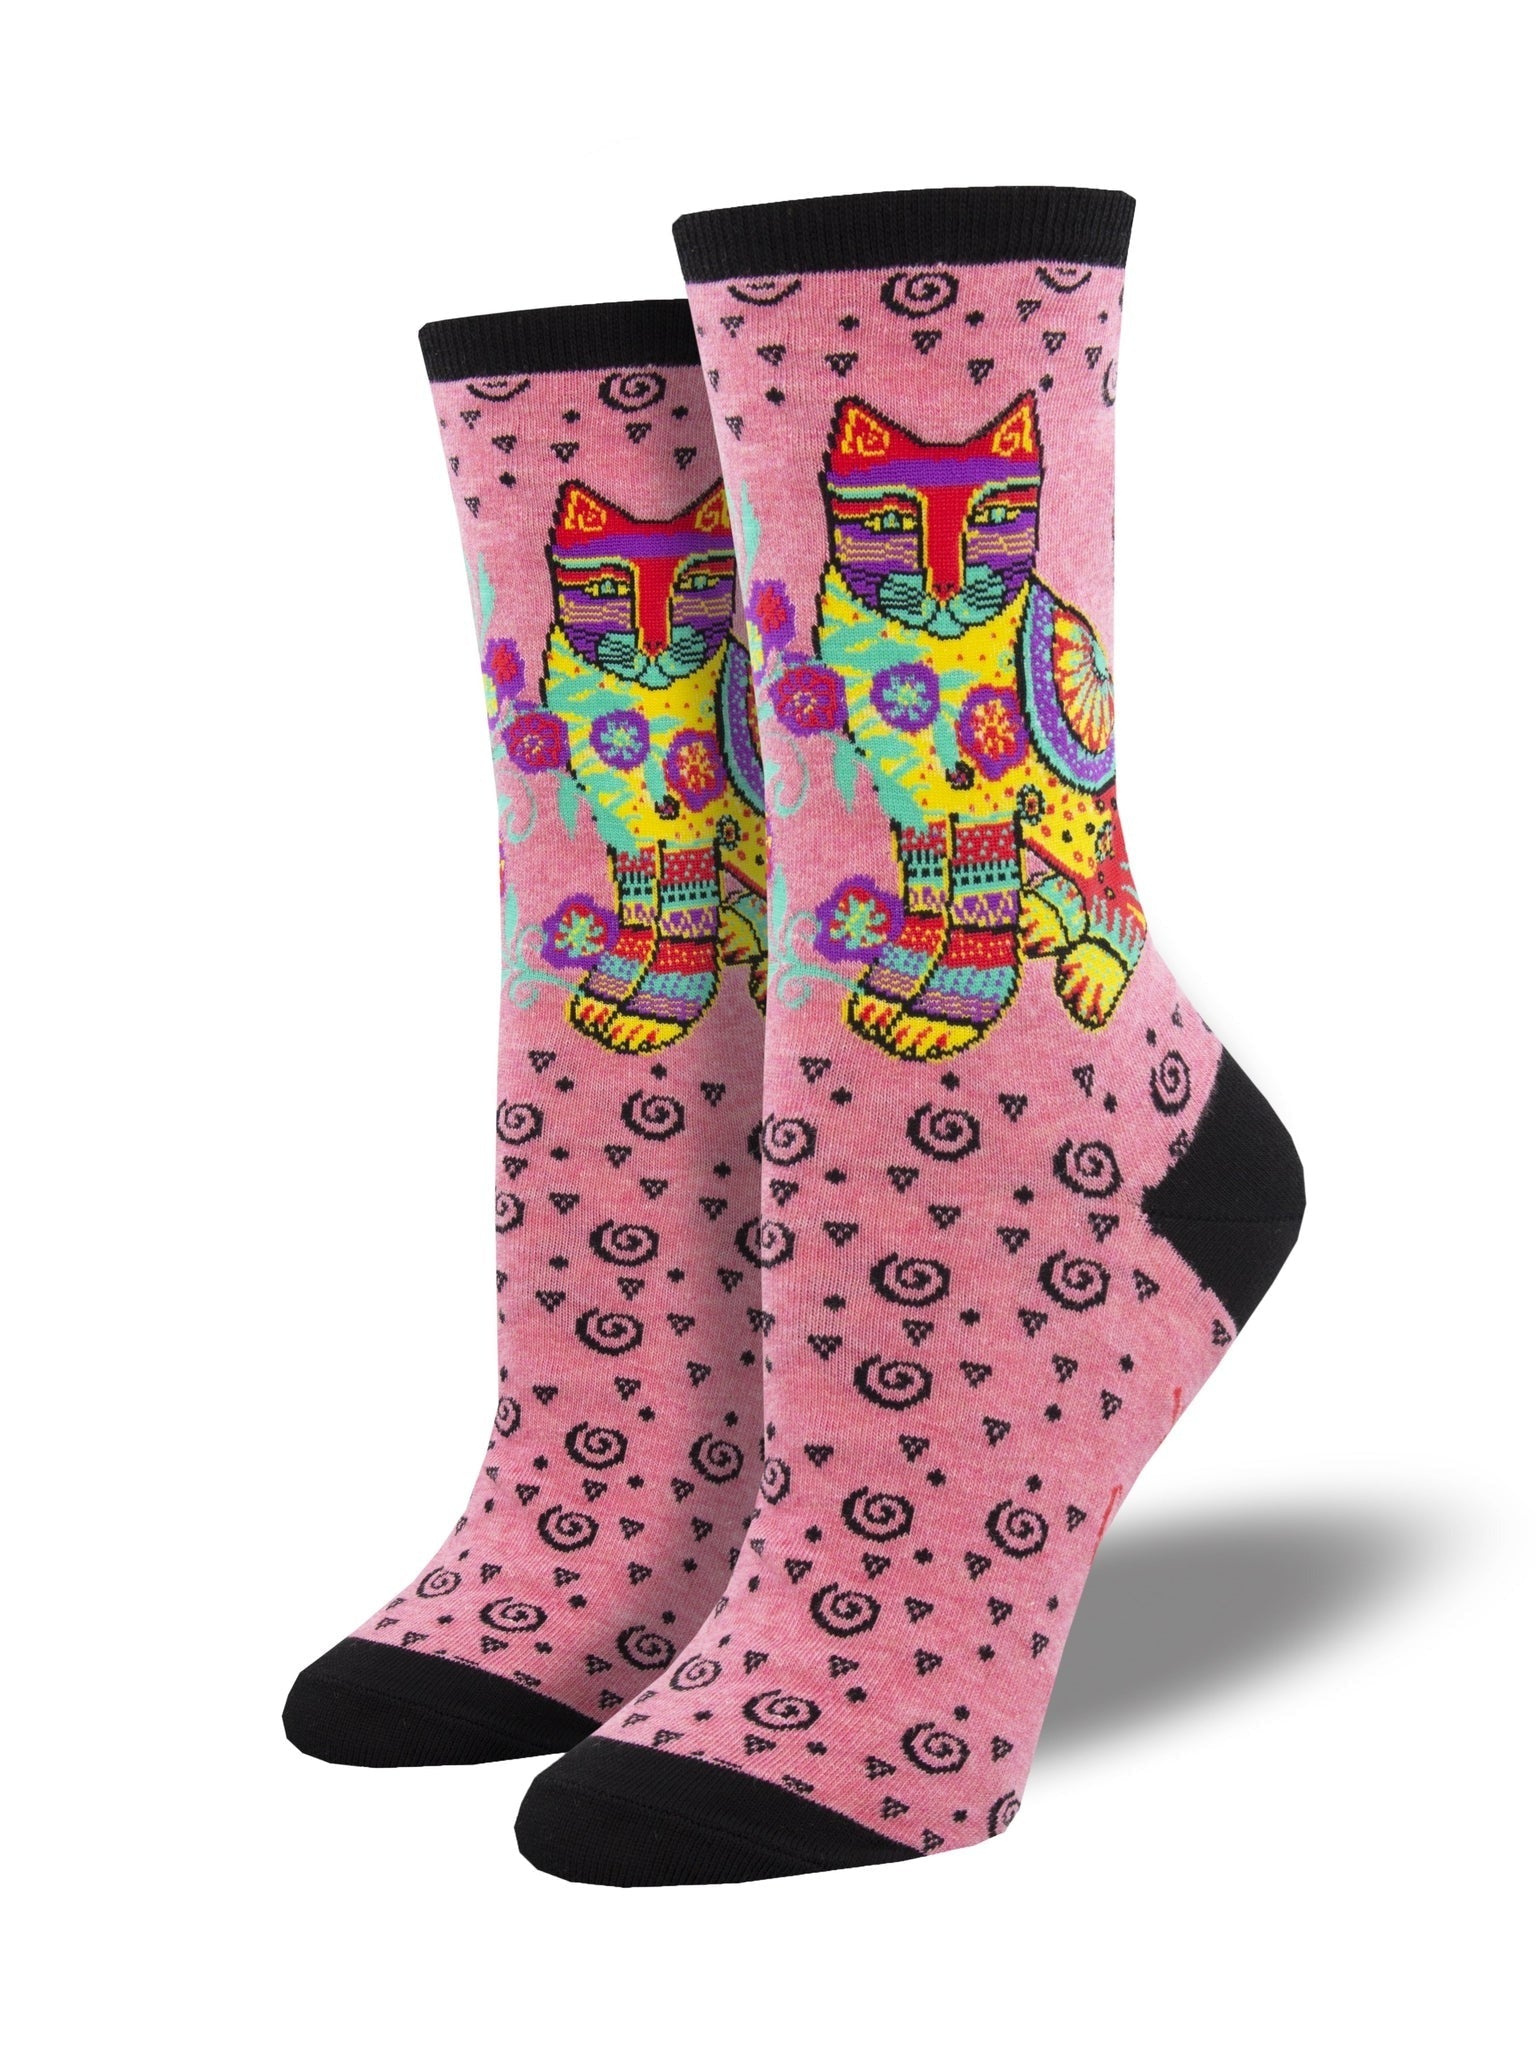 Maya Cat - Laurel Burch | Pink Heather - Socks - Socksmith